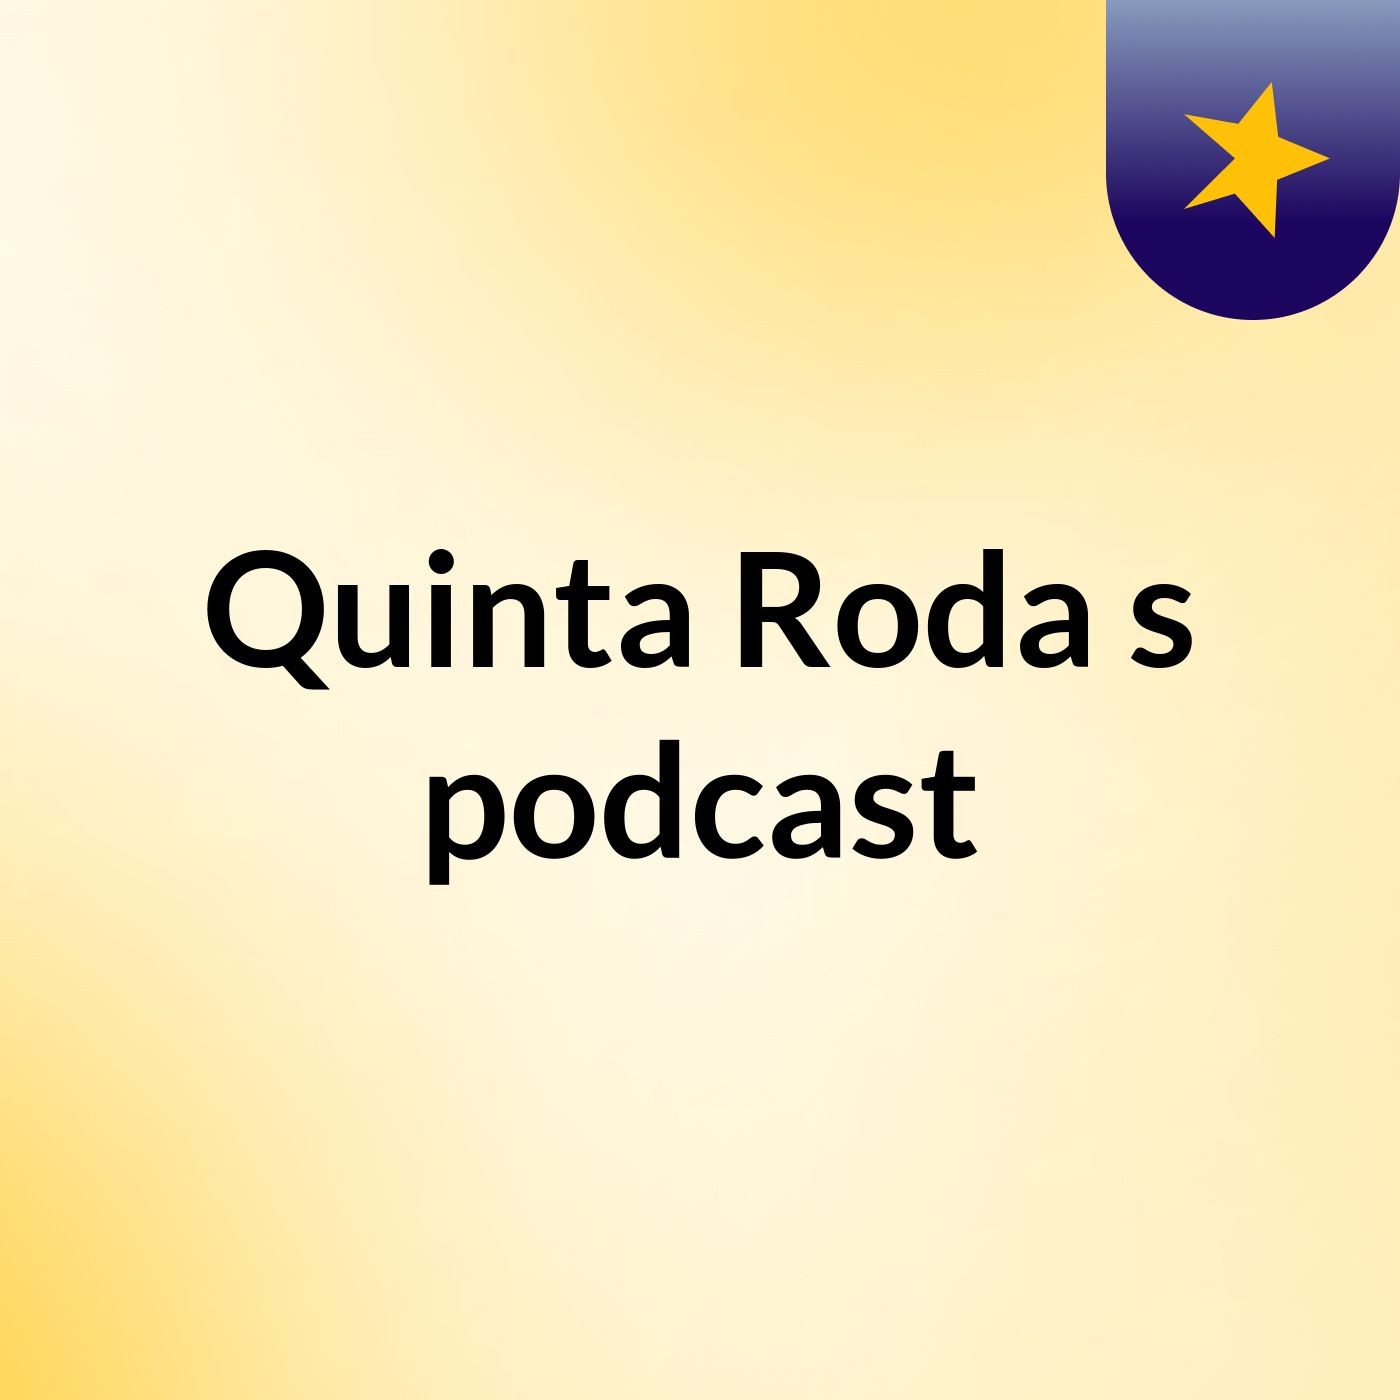 Quinta Roda's podcast